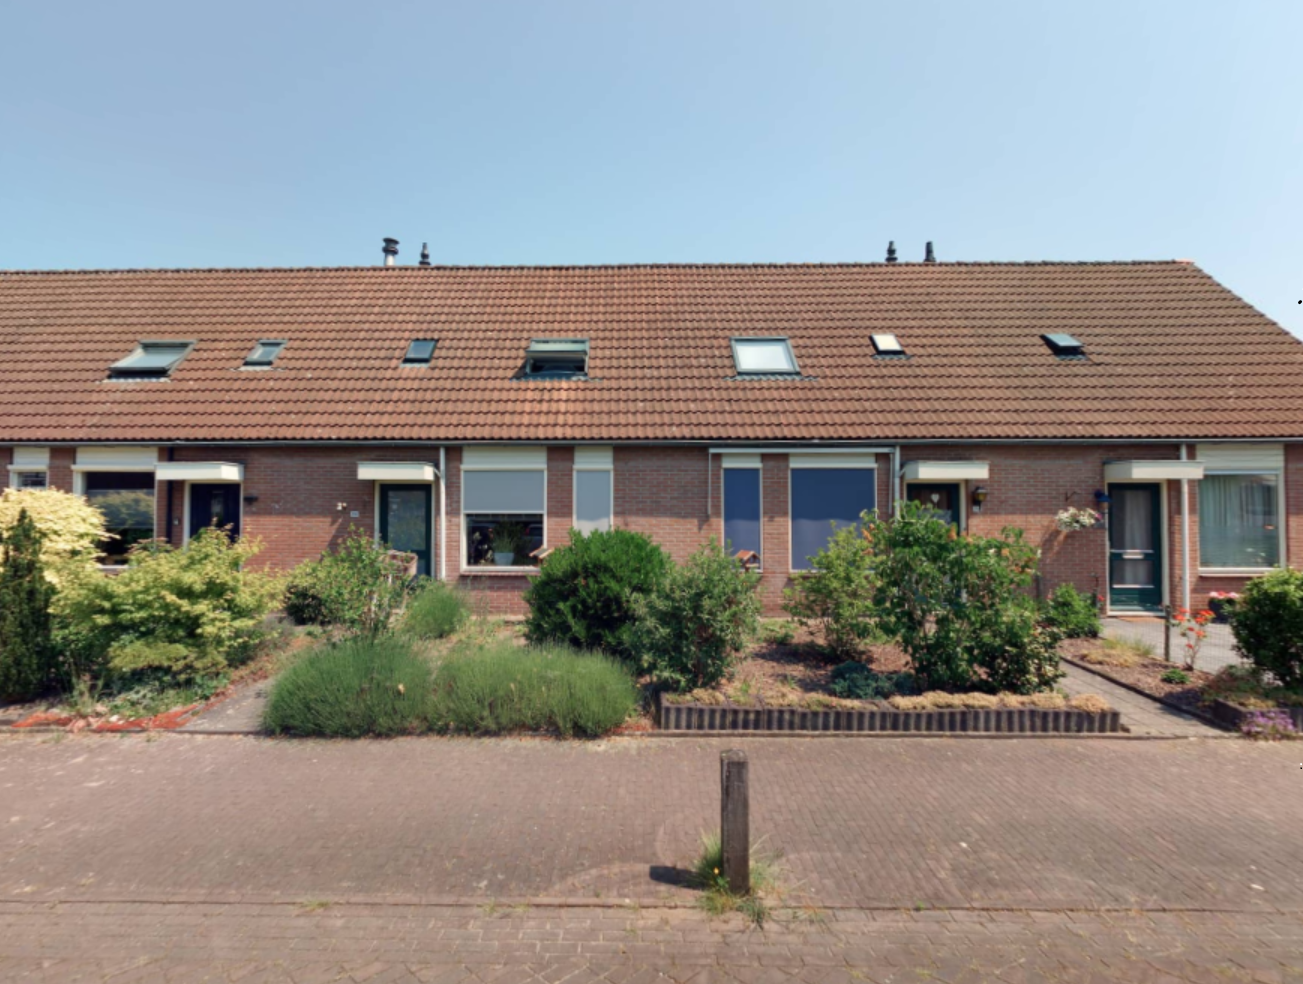 Thorbeckestraat 36, 7103 GJ Winterswijk, Nederland